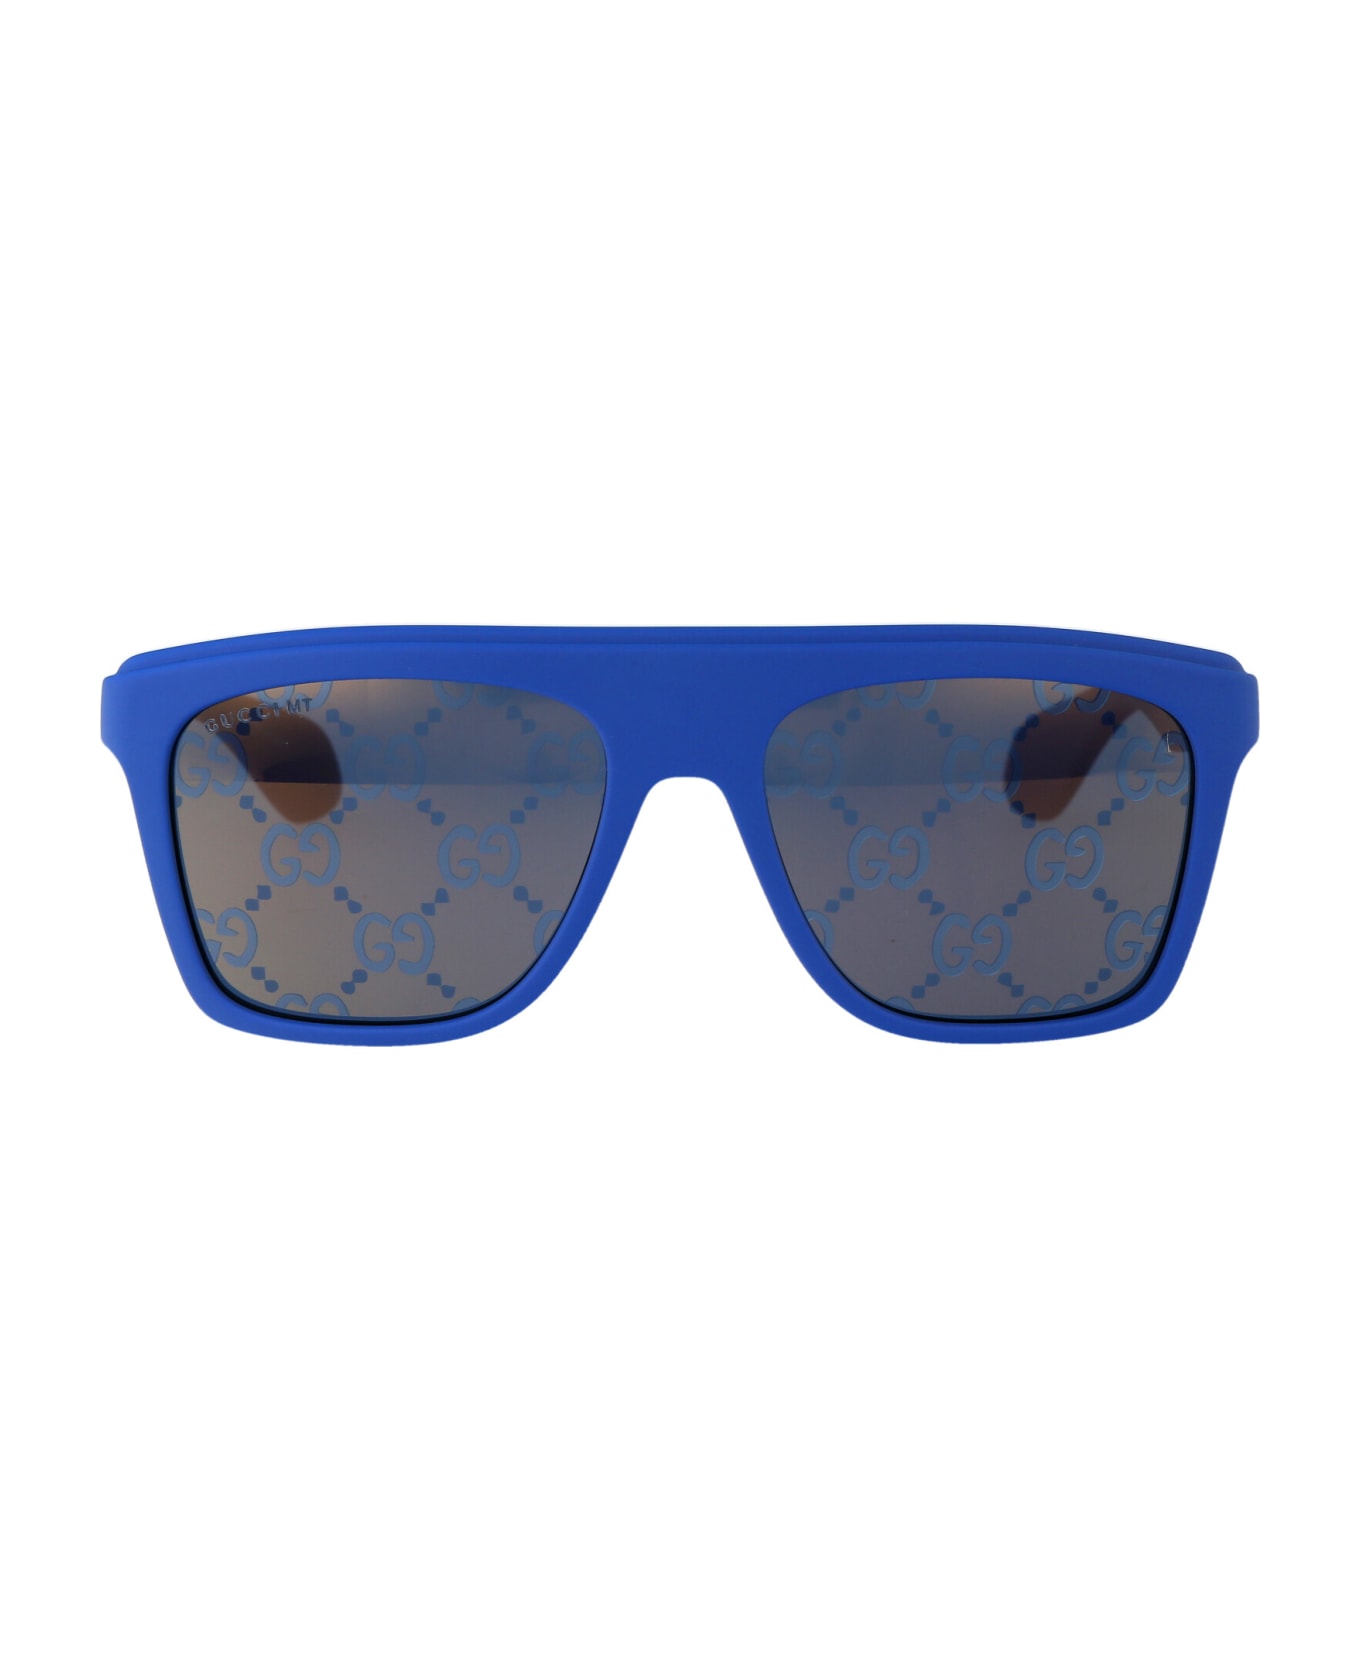 Gucci Eyewear Gg1570s Sunglasses - 004 BLUE BLUE BLUE